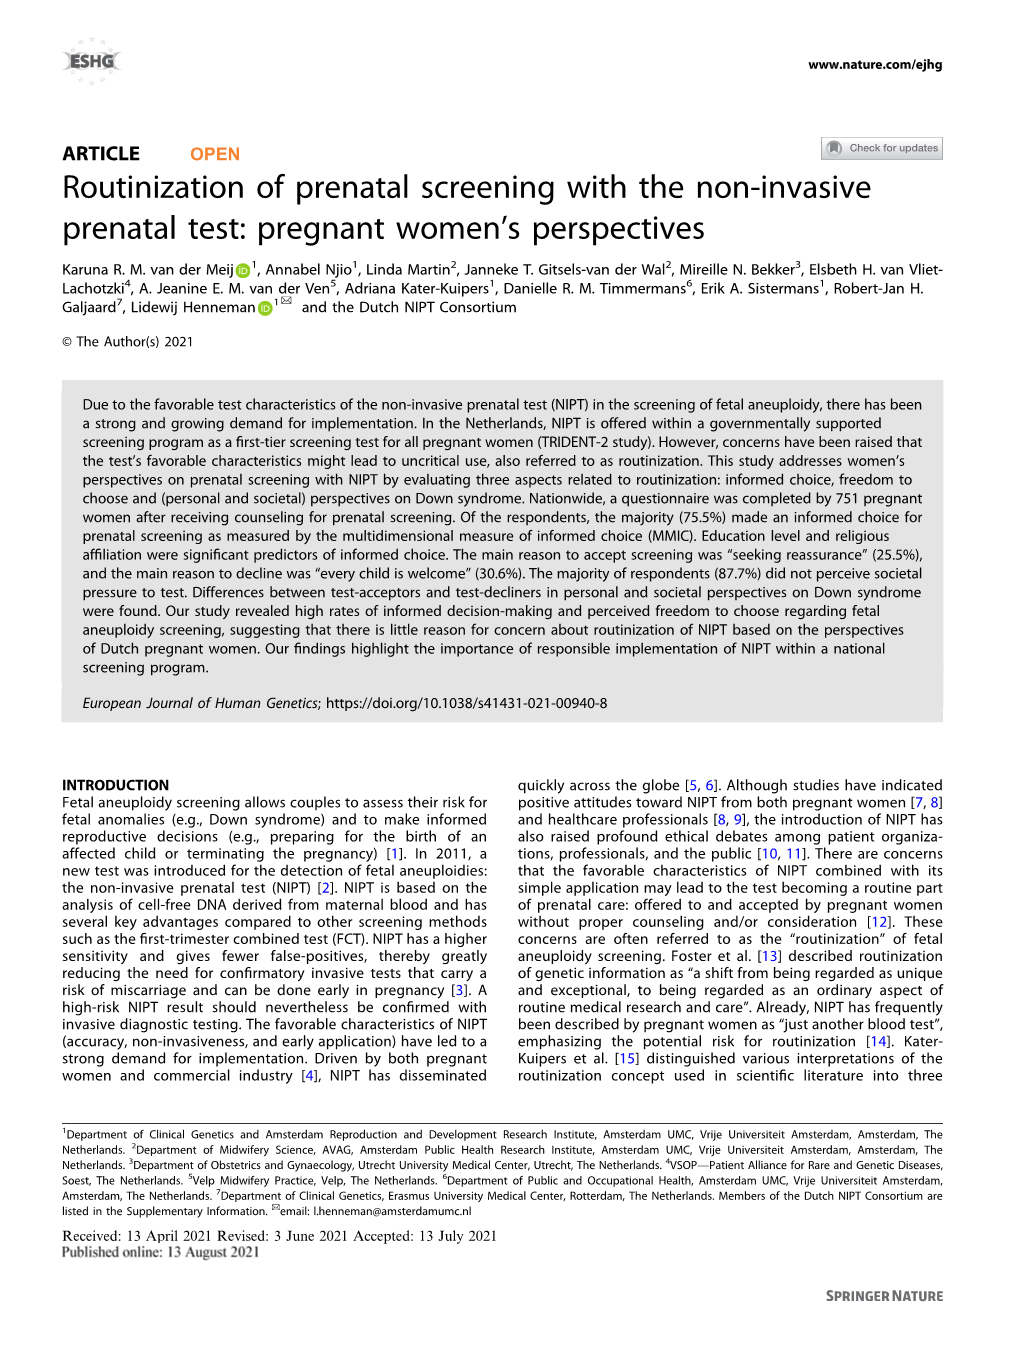 Routinization of Prenatal Screening with the Non-Invasive Prenatal Test: Pregnant Women’S Perspectives